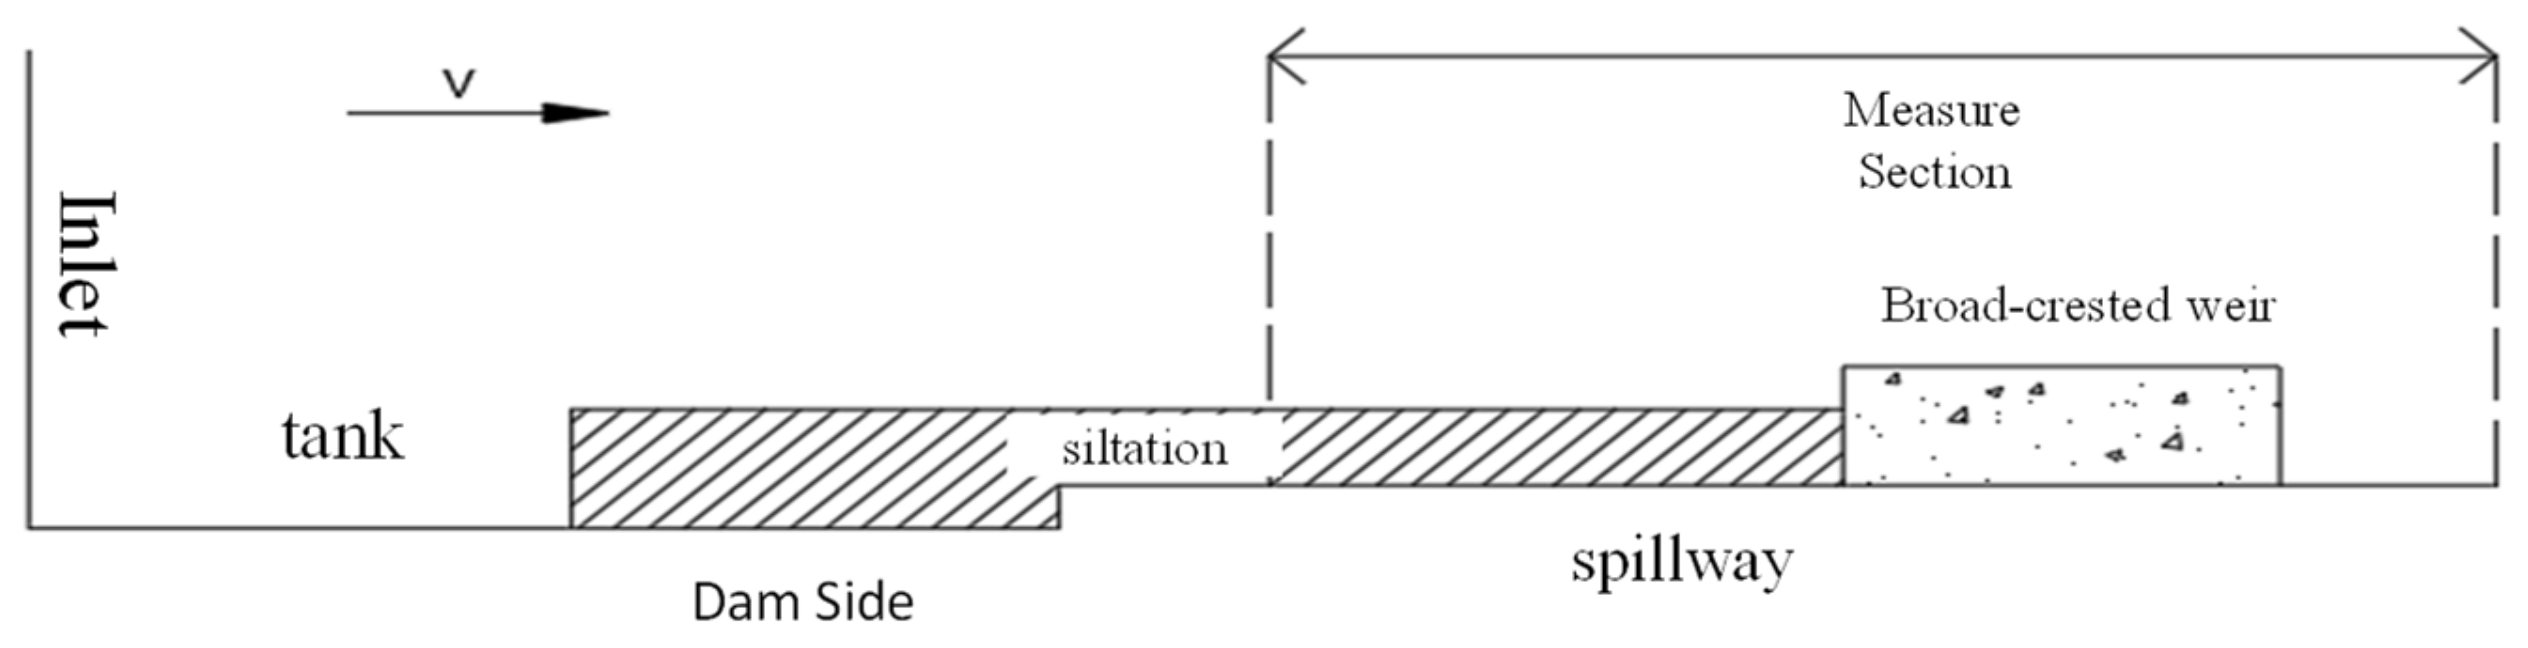 siltation diagram